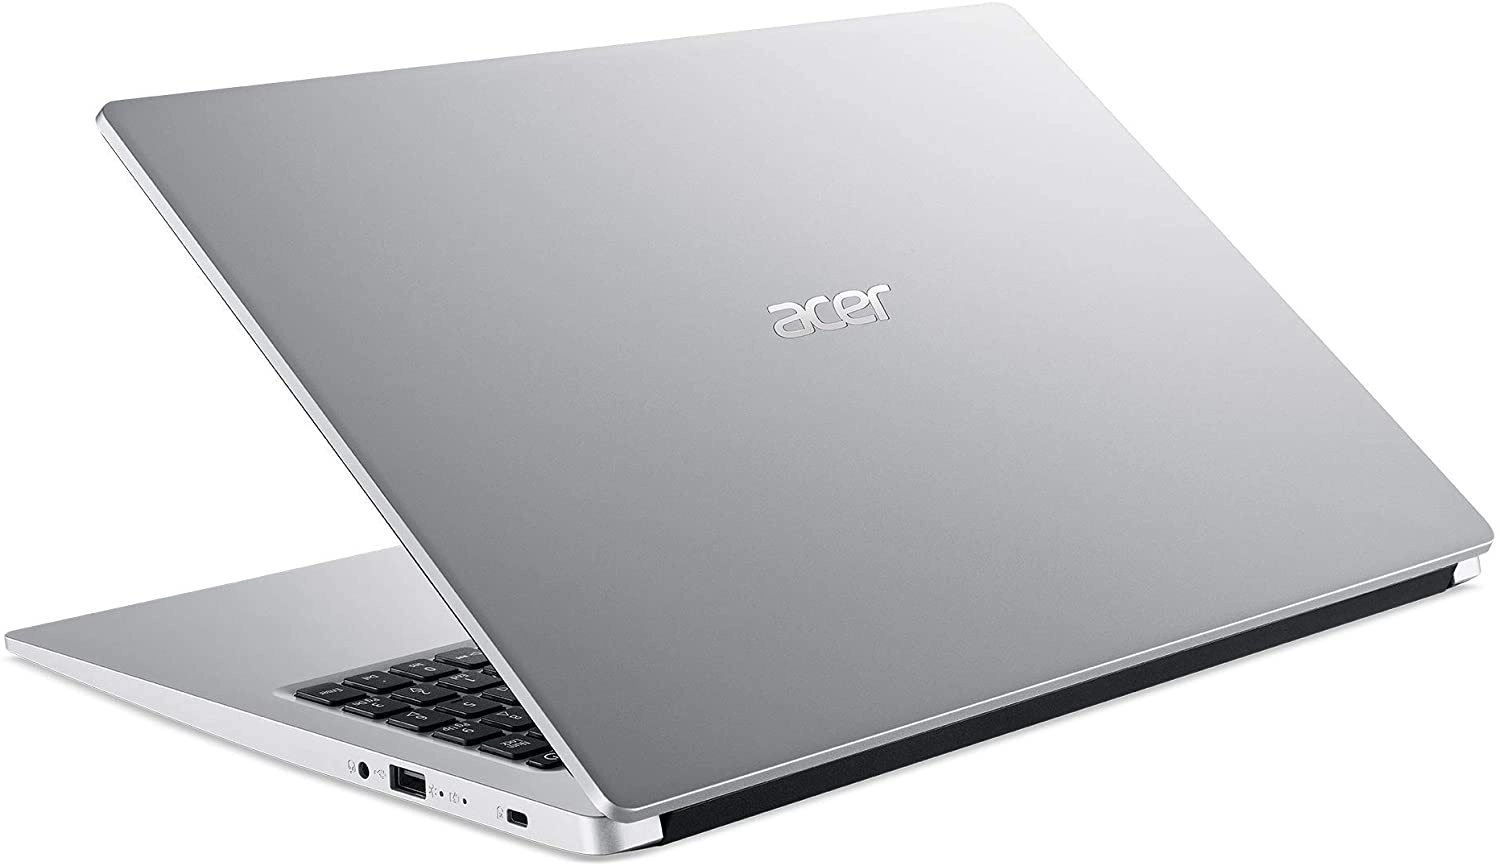 Acer A315-23-R15Y laptop image